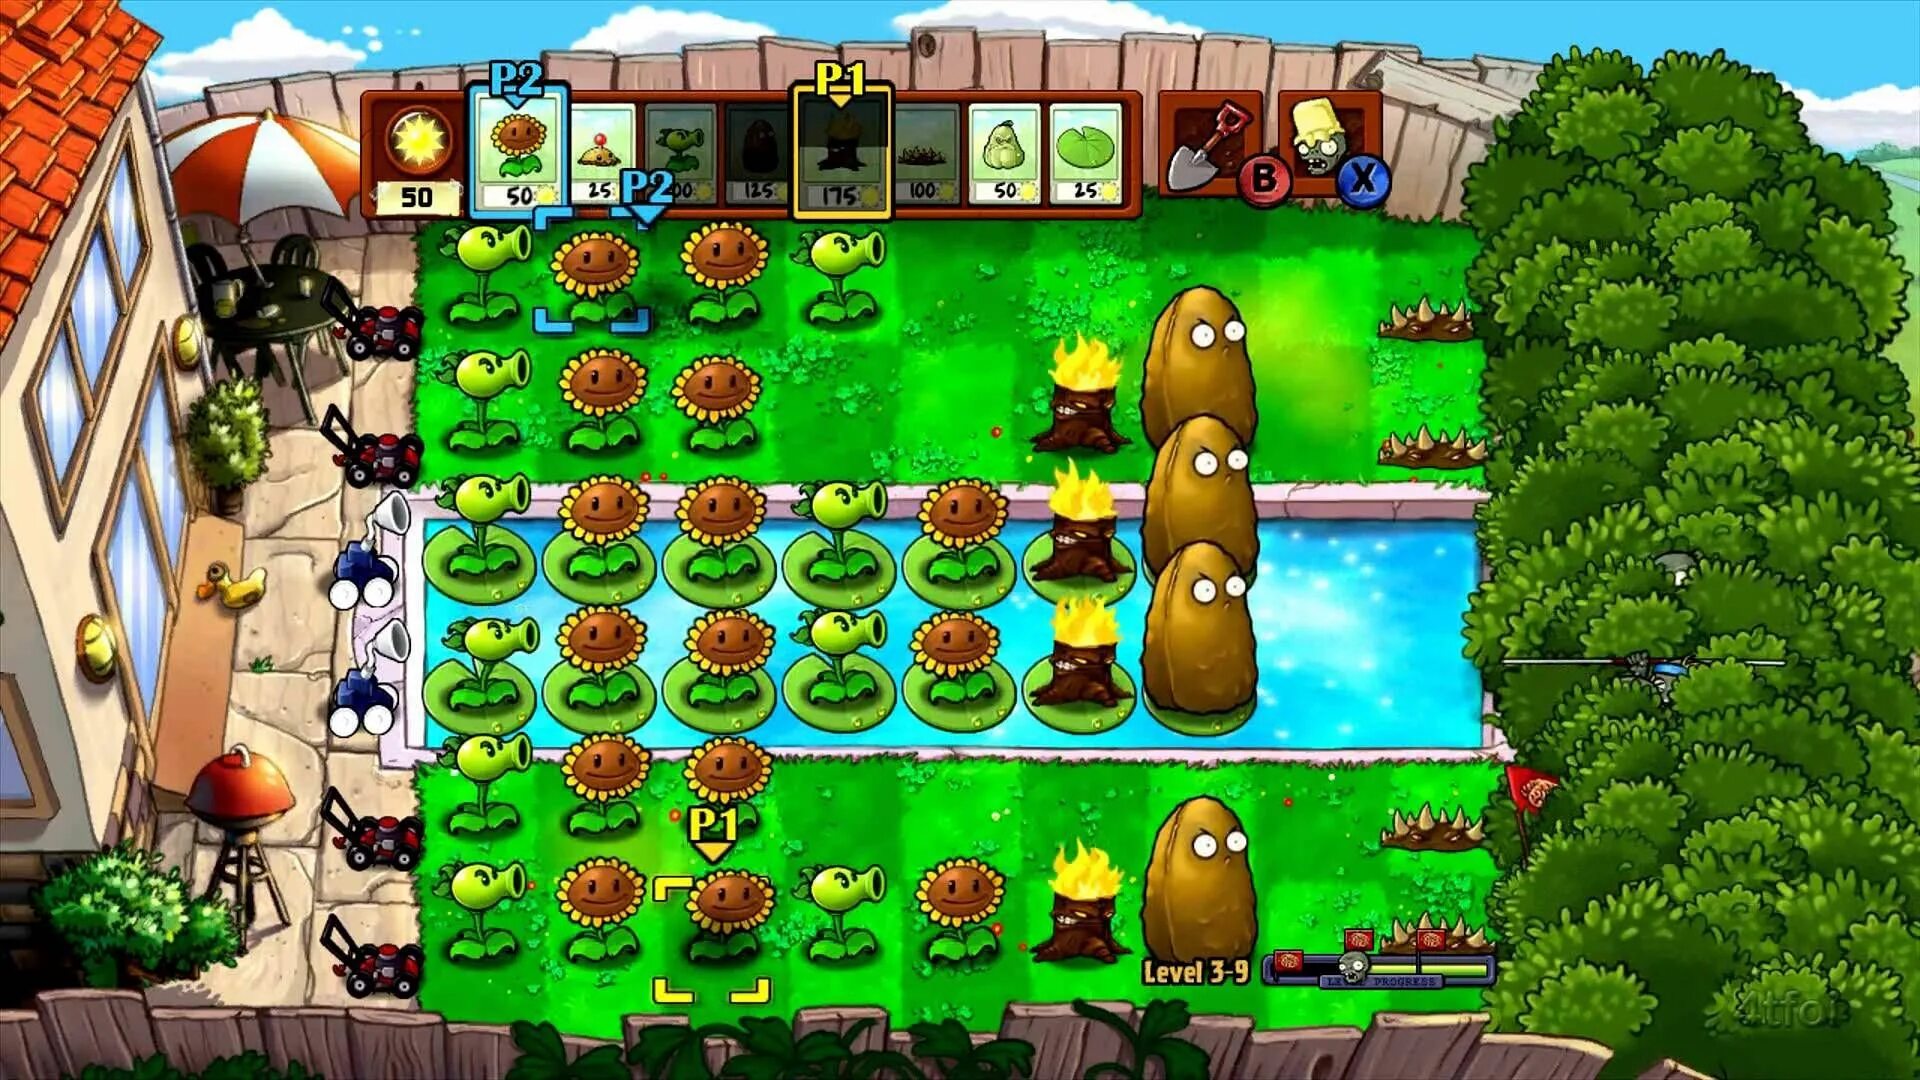 Зомби против xbox 360. Растение против зомби хбокс 360. Игра зомби против растений на Xbox 360. Plants vs Zombies Xbox. Зомби на крыше PVZ.